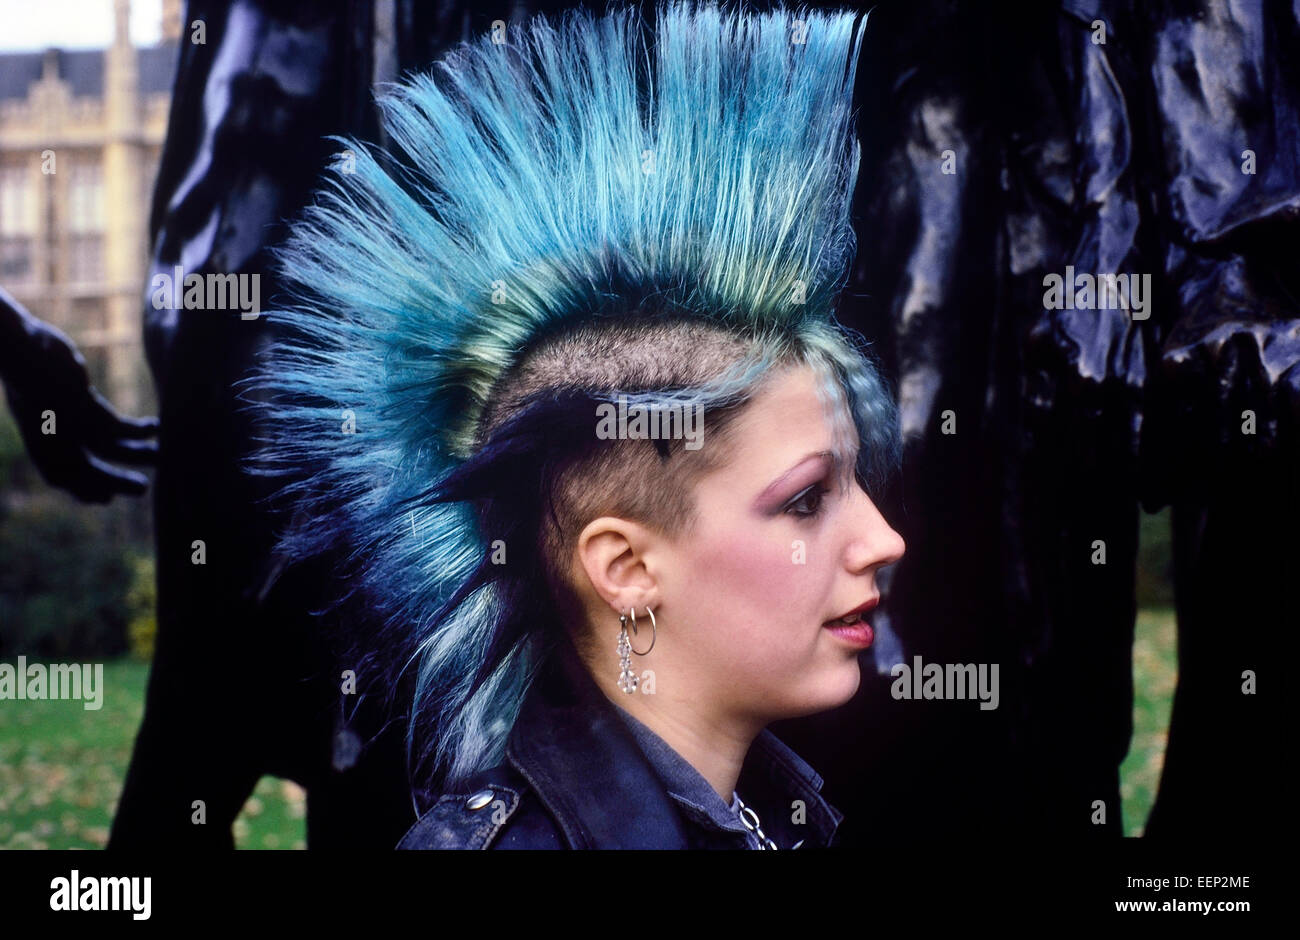 34 Top Images Punk Blue Hair : Xxxtentacion Blue Hair Wallpapers Wallpaper Cave